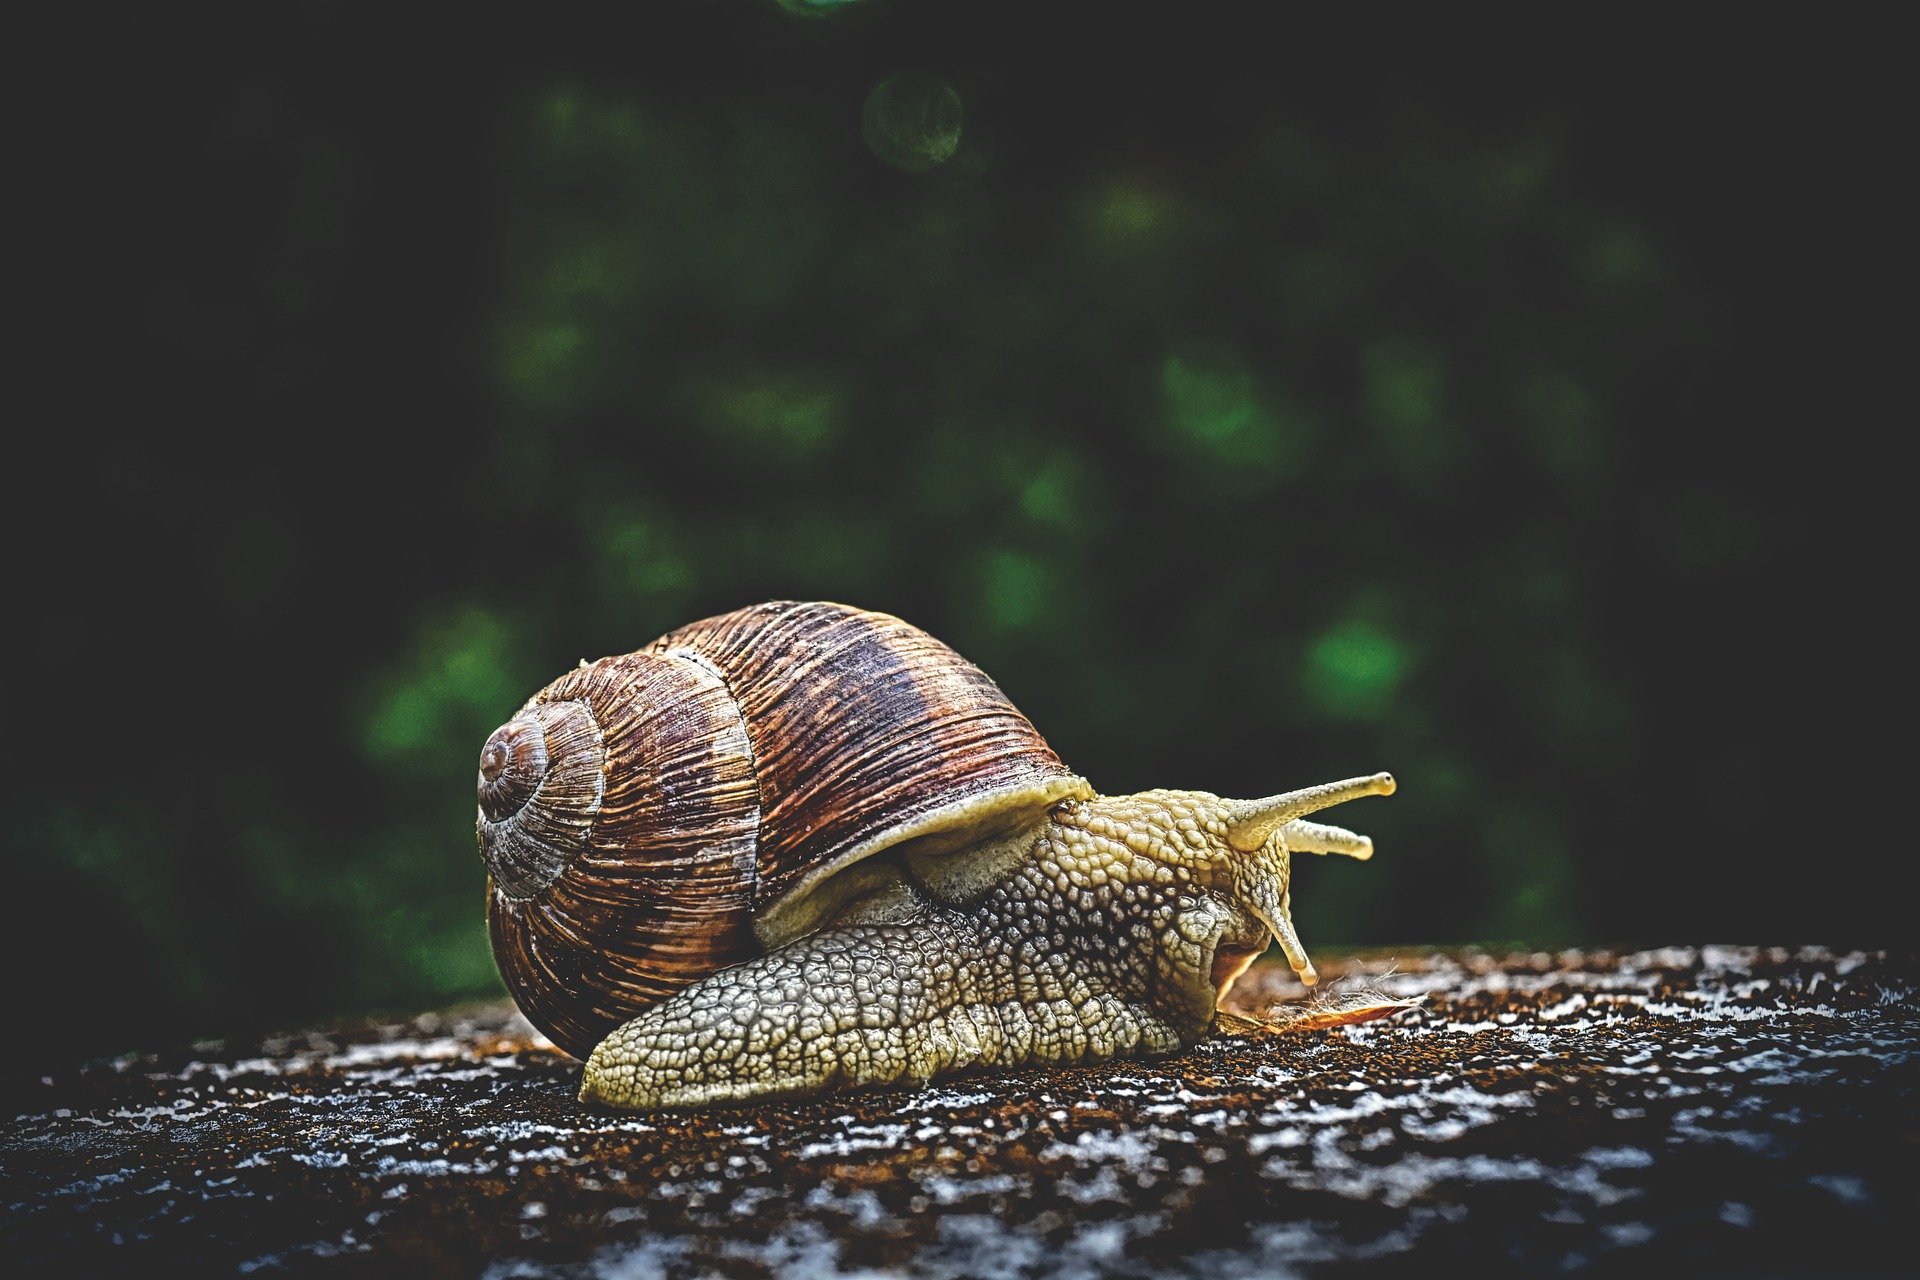 Can you imagine having a snail on your head? | Photo: Pixabay/Alexas_Fotos